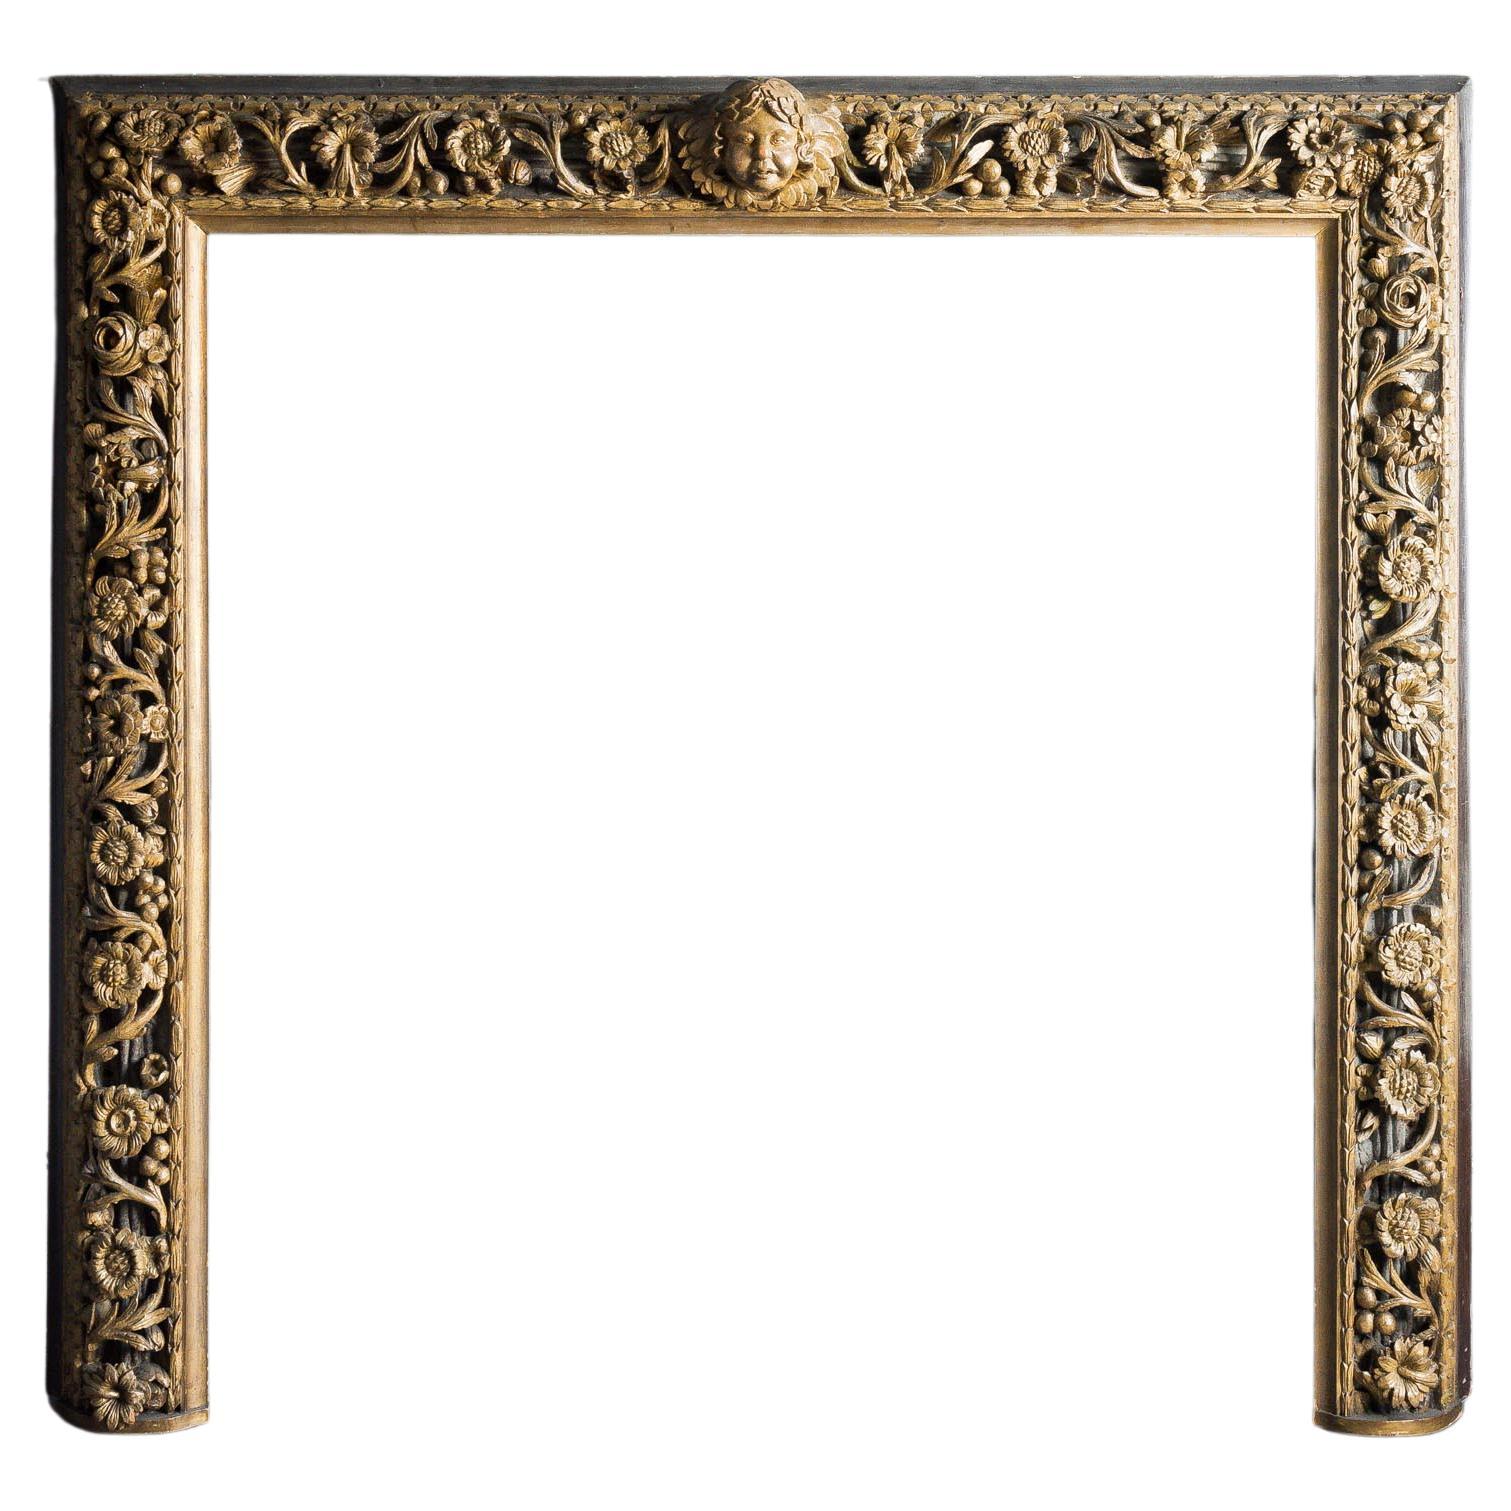 in Manner of Grinling Gibbons Overmantle Carved Gilt Mirror